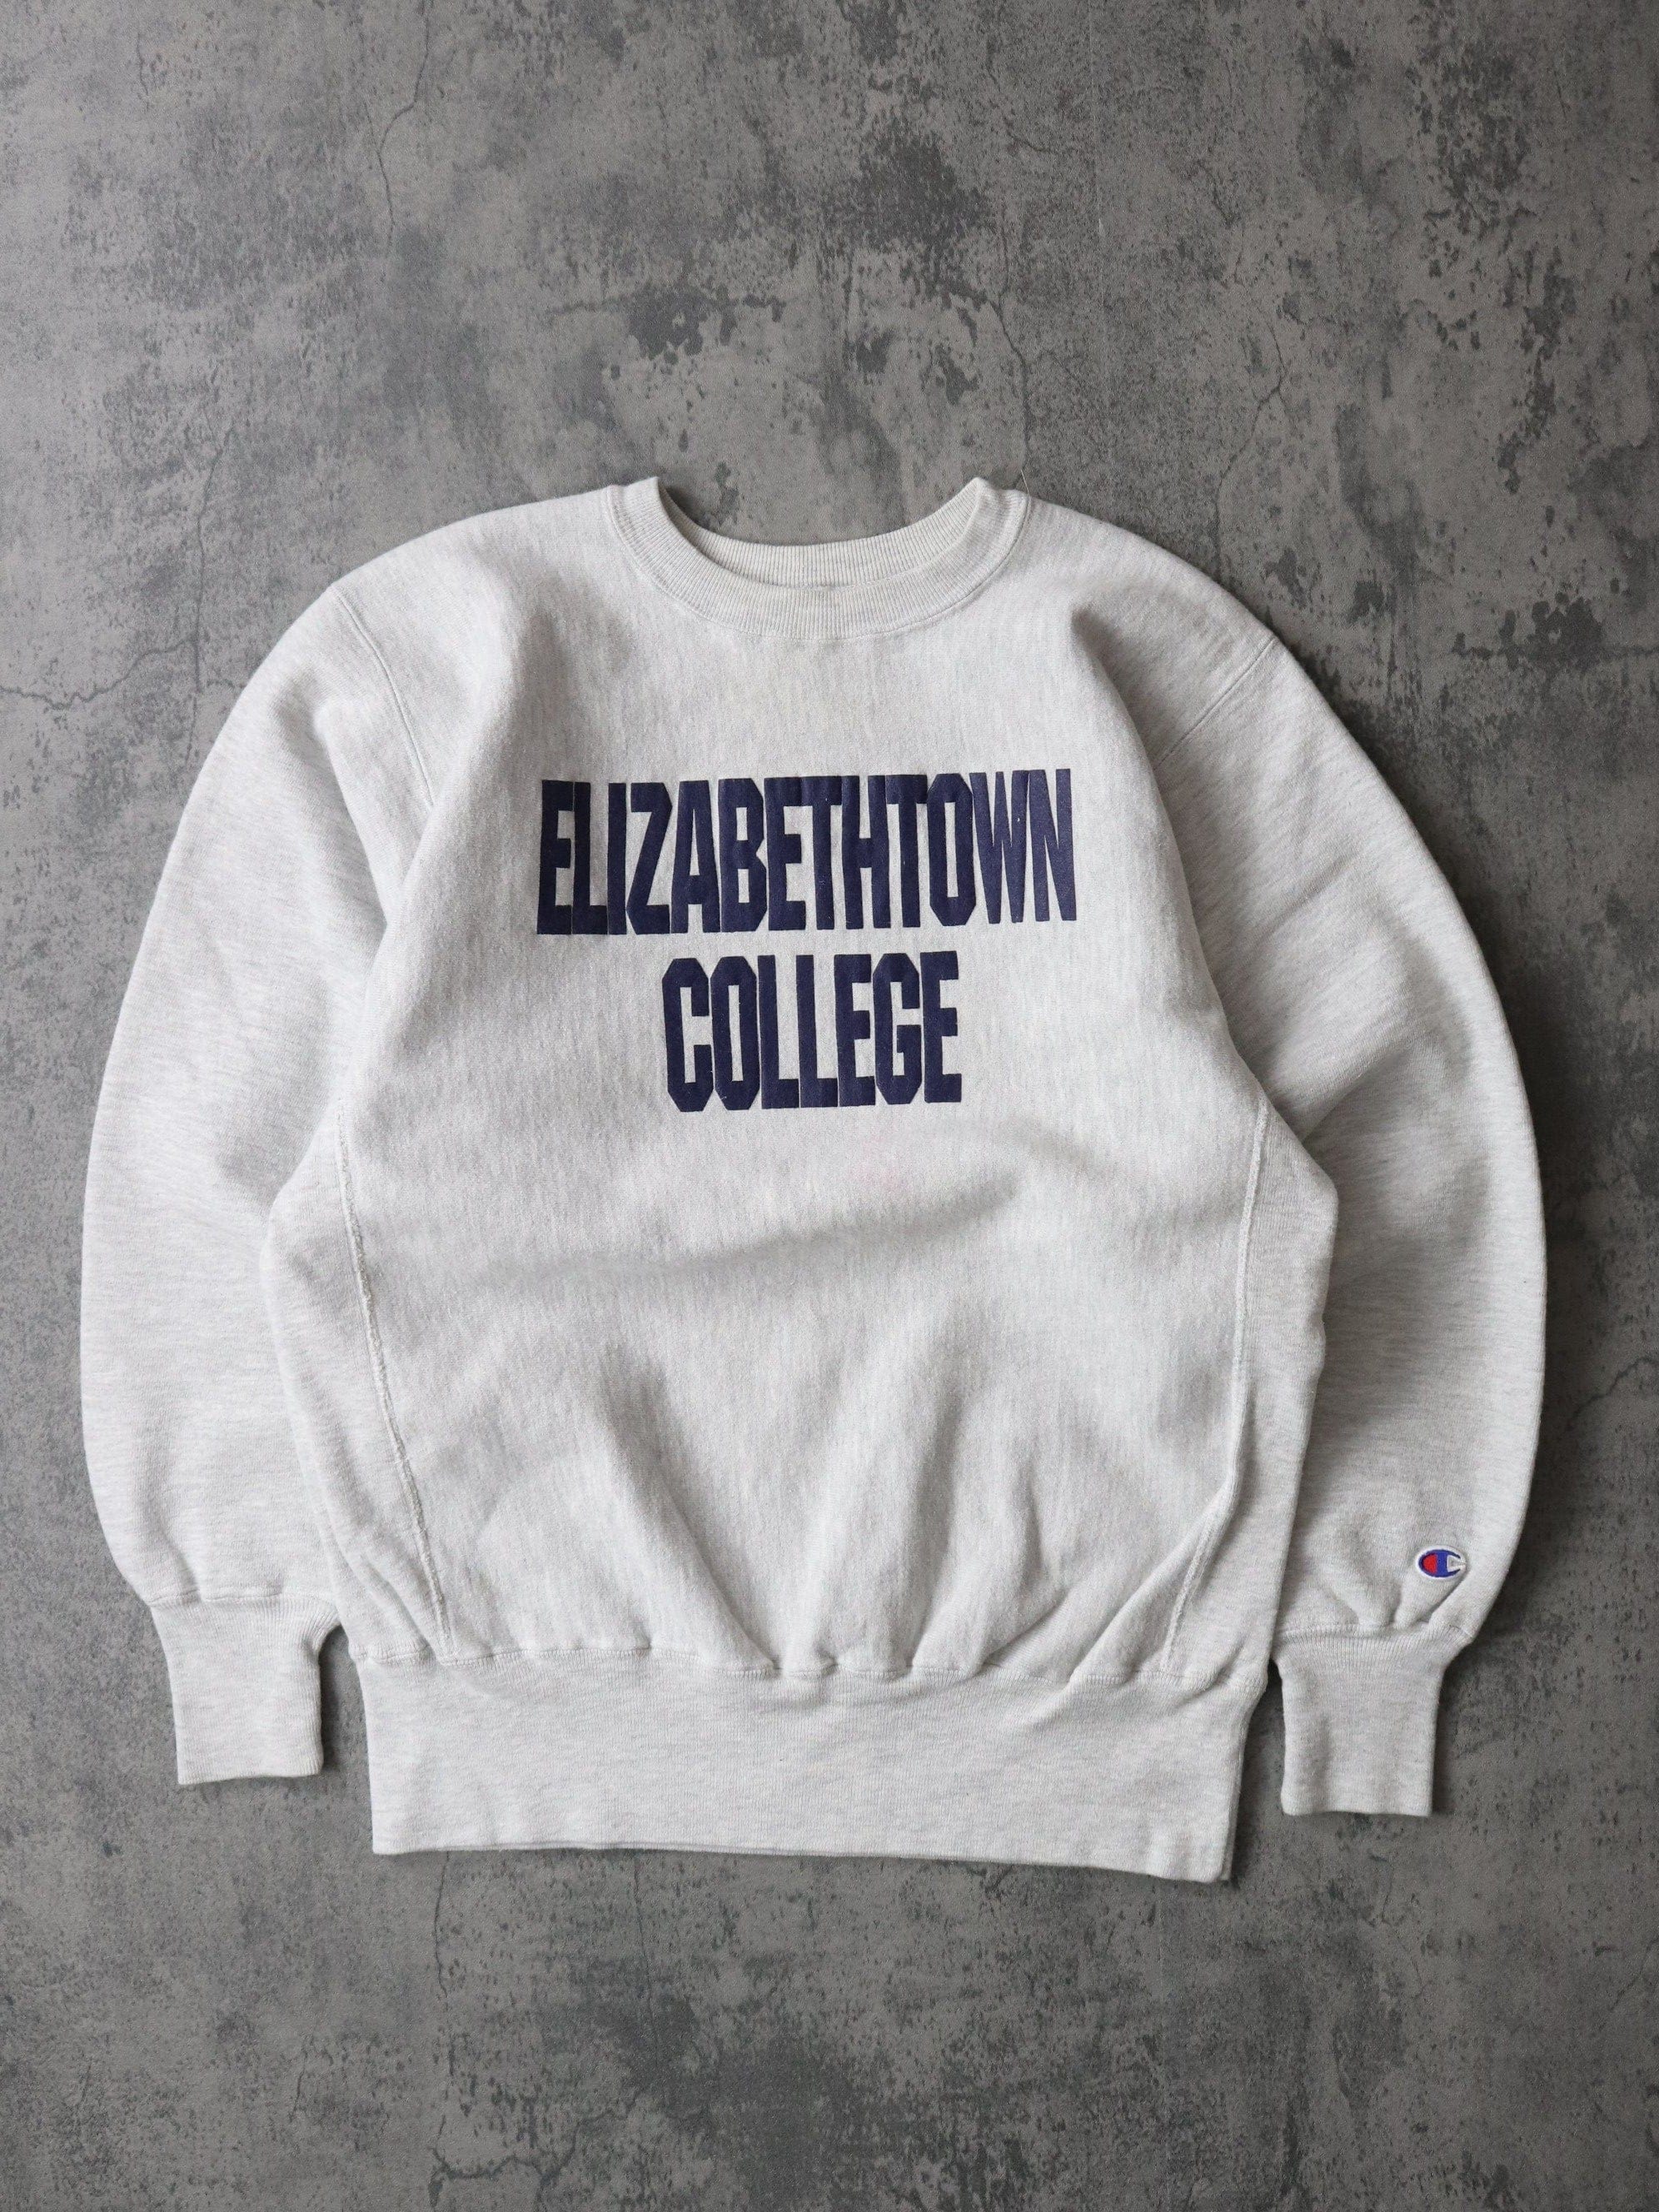 Vintage Elizabethtown College Sweatshirt Mens Large Grey Champion